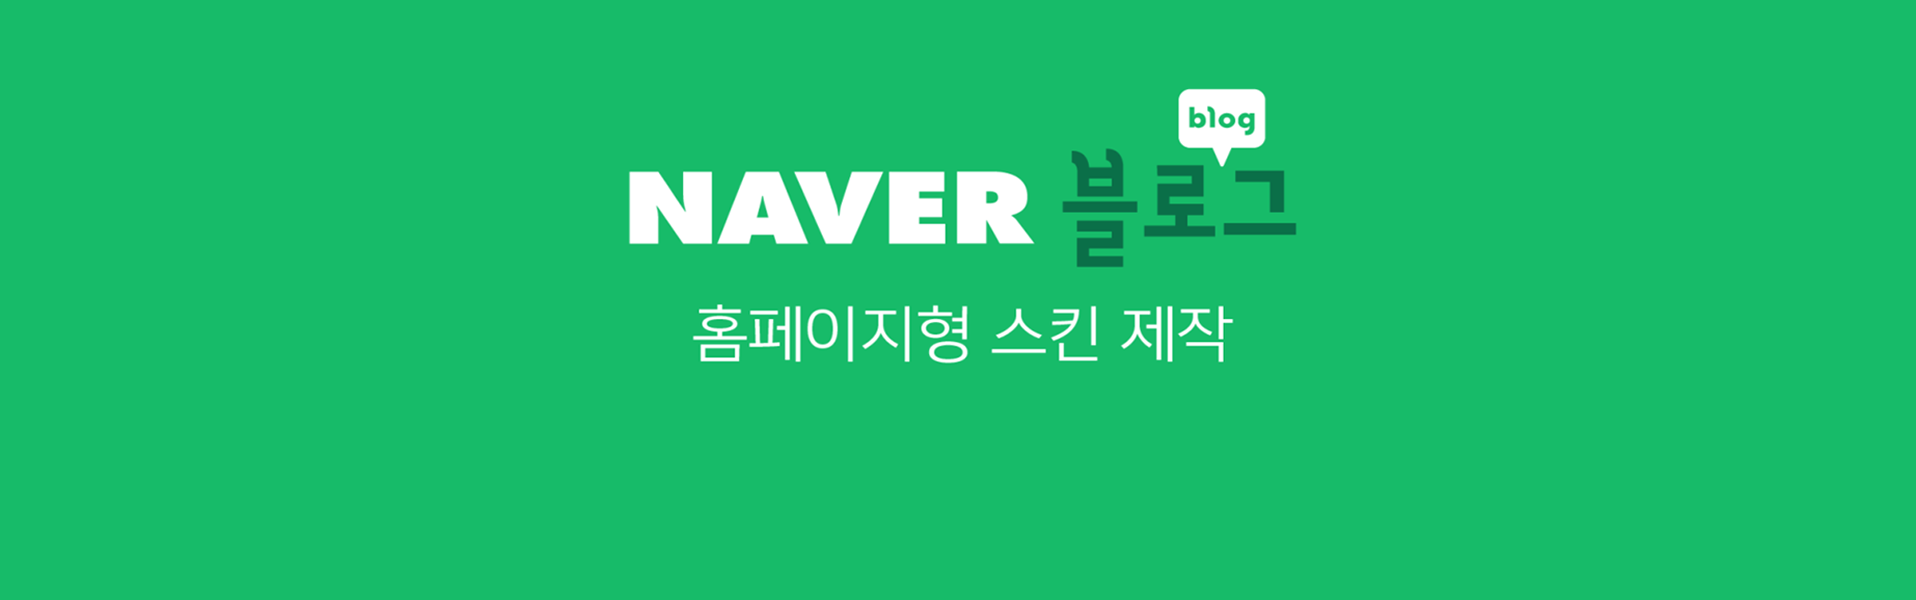 Naver Blog Guide 2019 Info Cubic Japan Blog